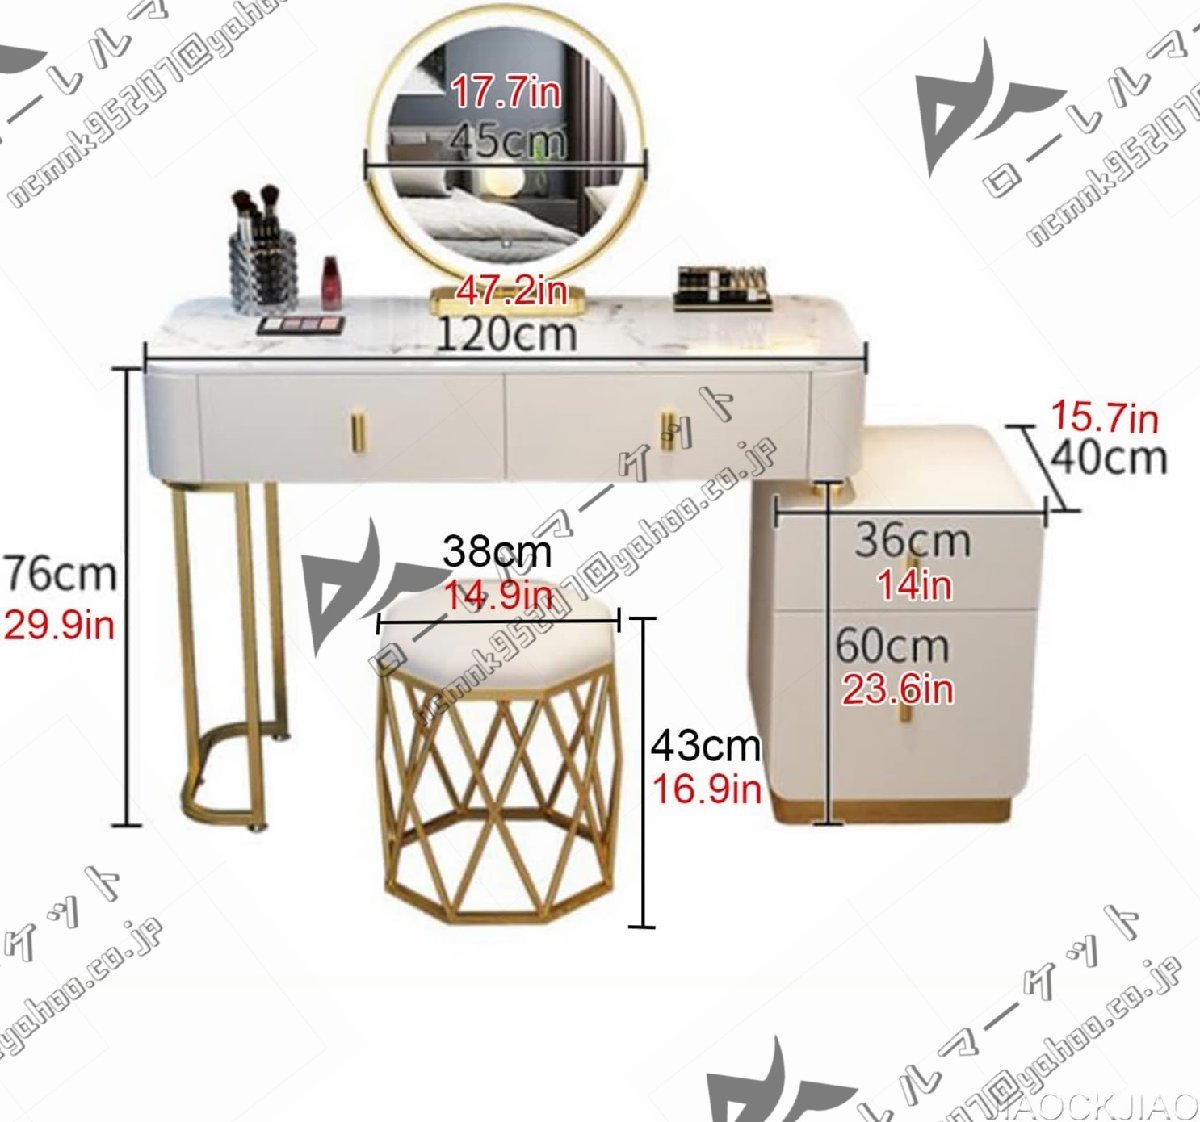  light attaching mirror attaching dresser dresser stool attaching white / gray dressing table set drawer attaching dresser 120cm